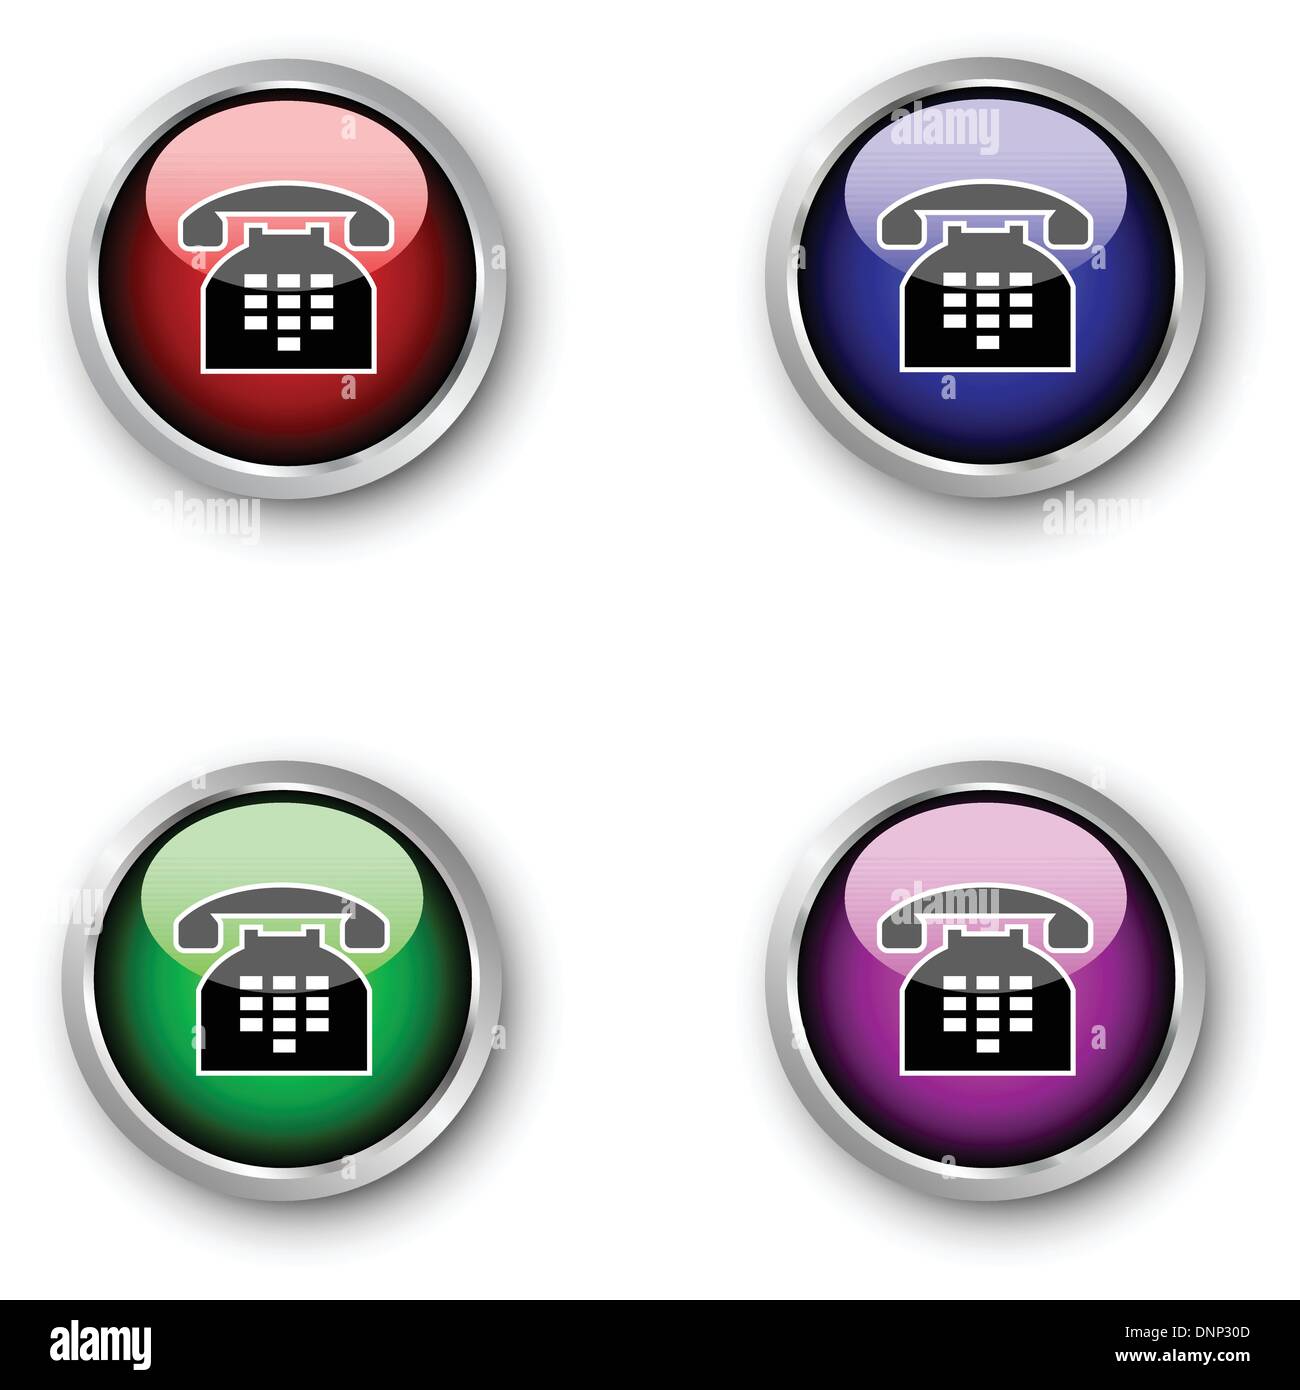 Glossy telephone icons Stock Vector